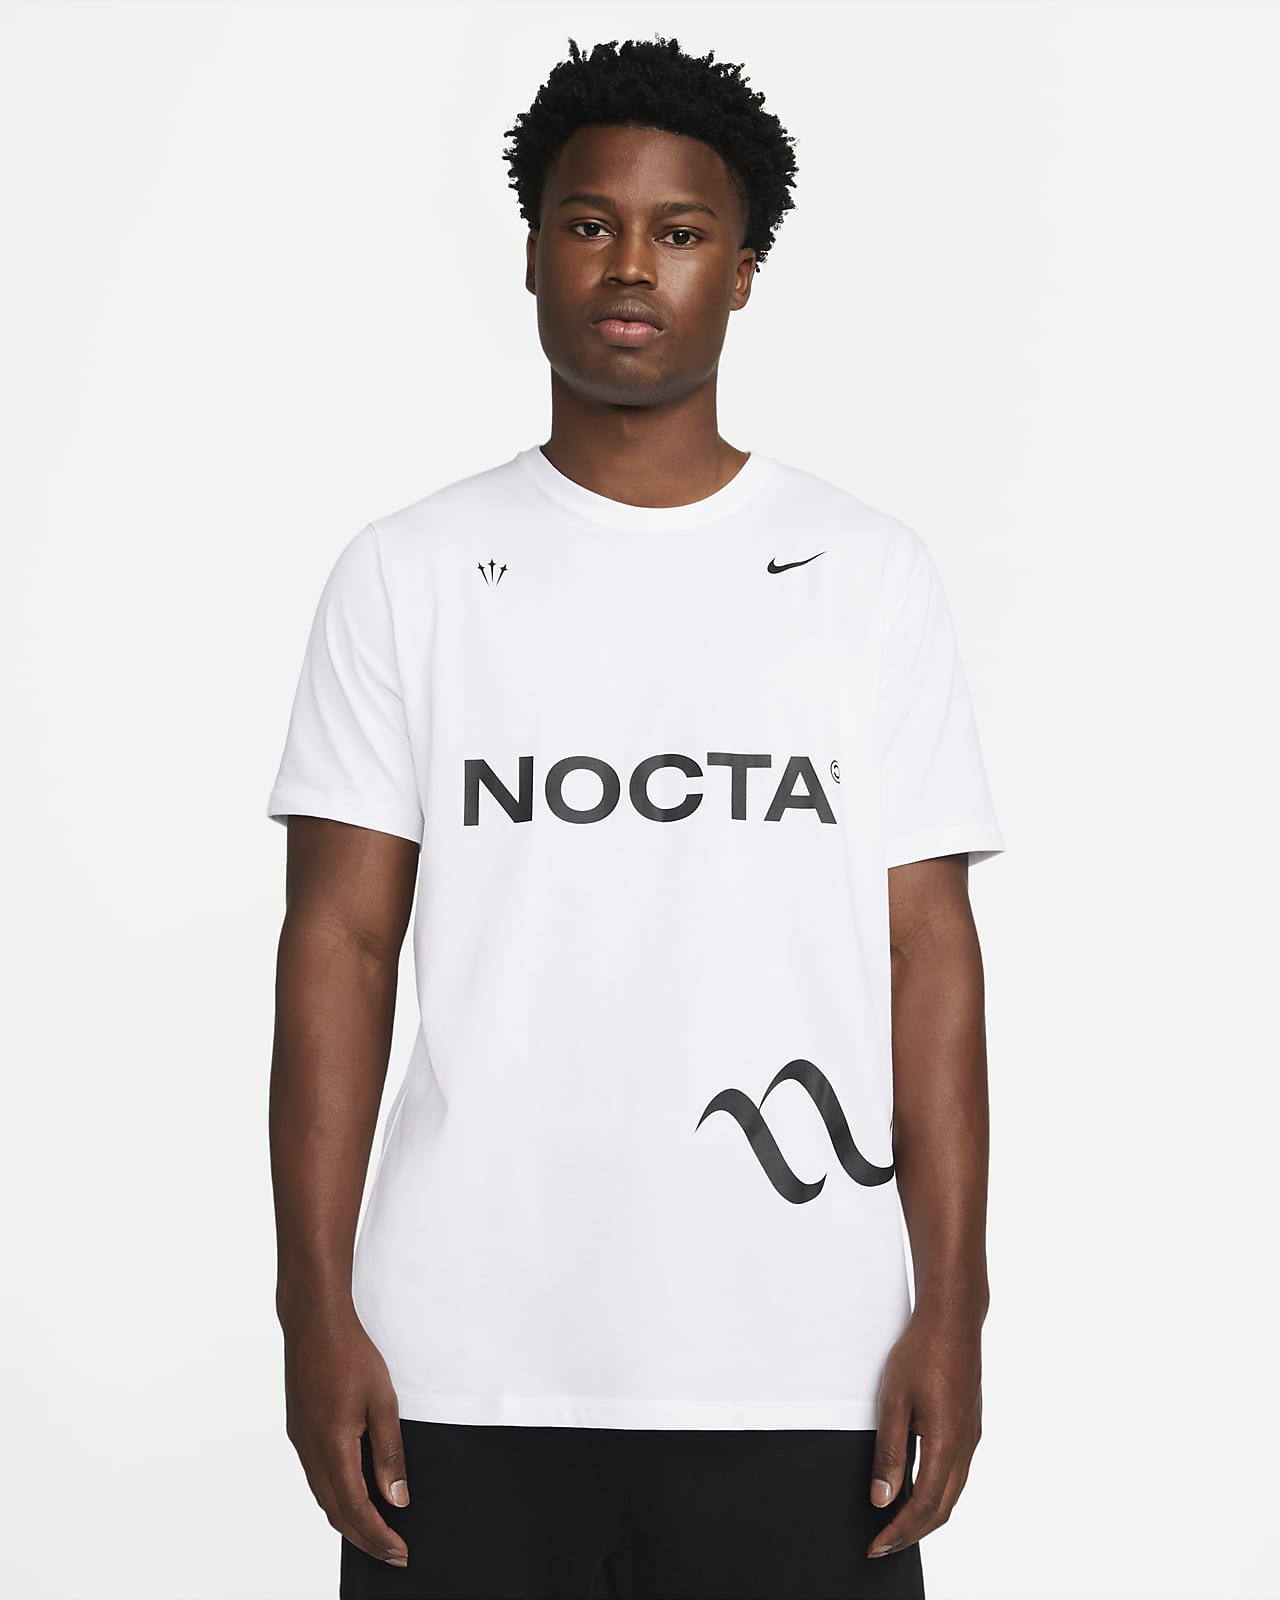 NOCTA Men's Short-Sleeve Basketball Top